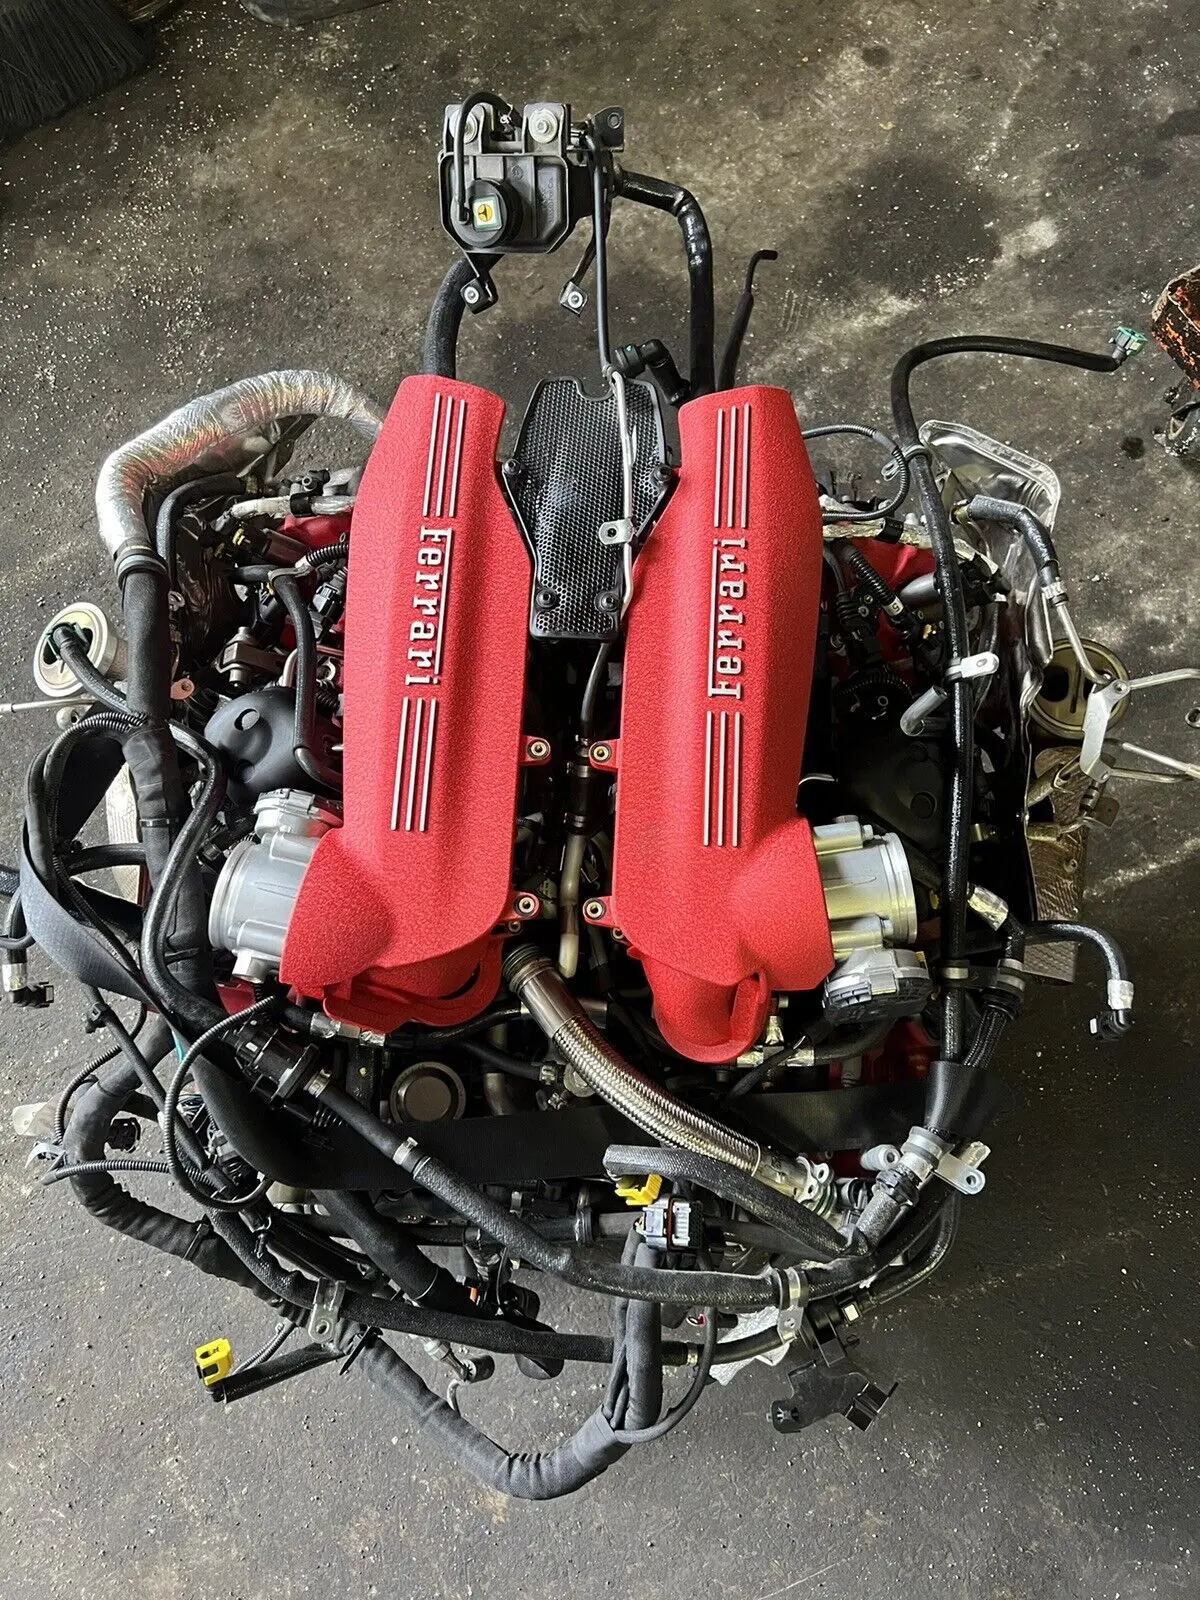 ferrari 488 spider engine - What engine is in a Ferrari 488